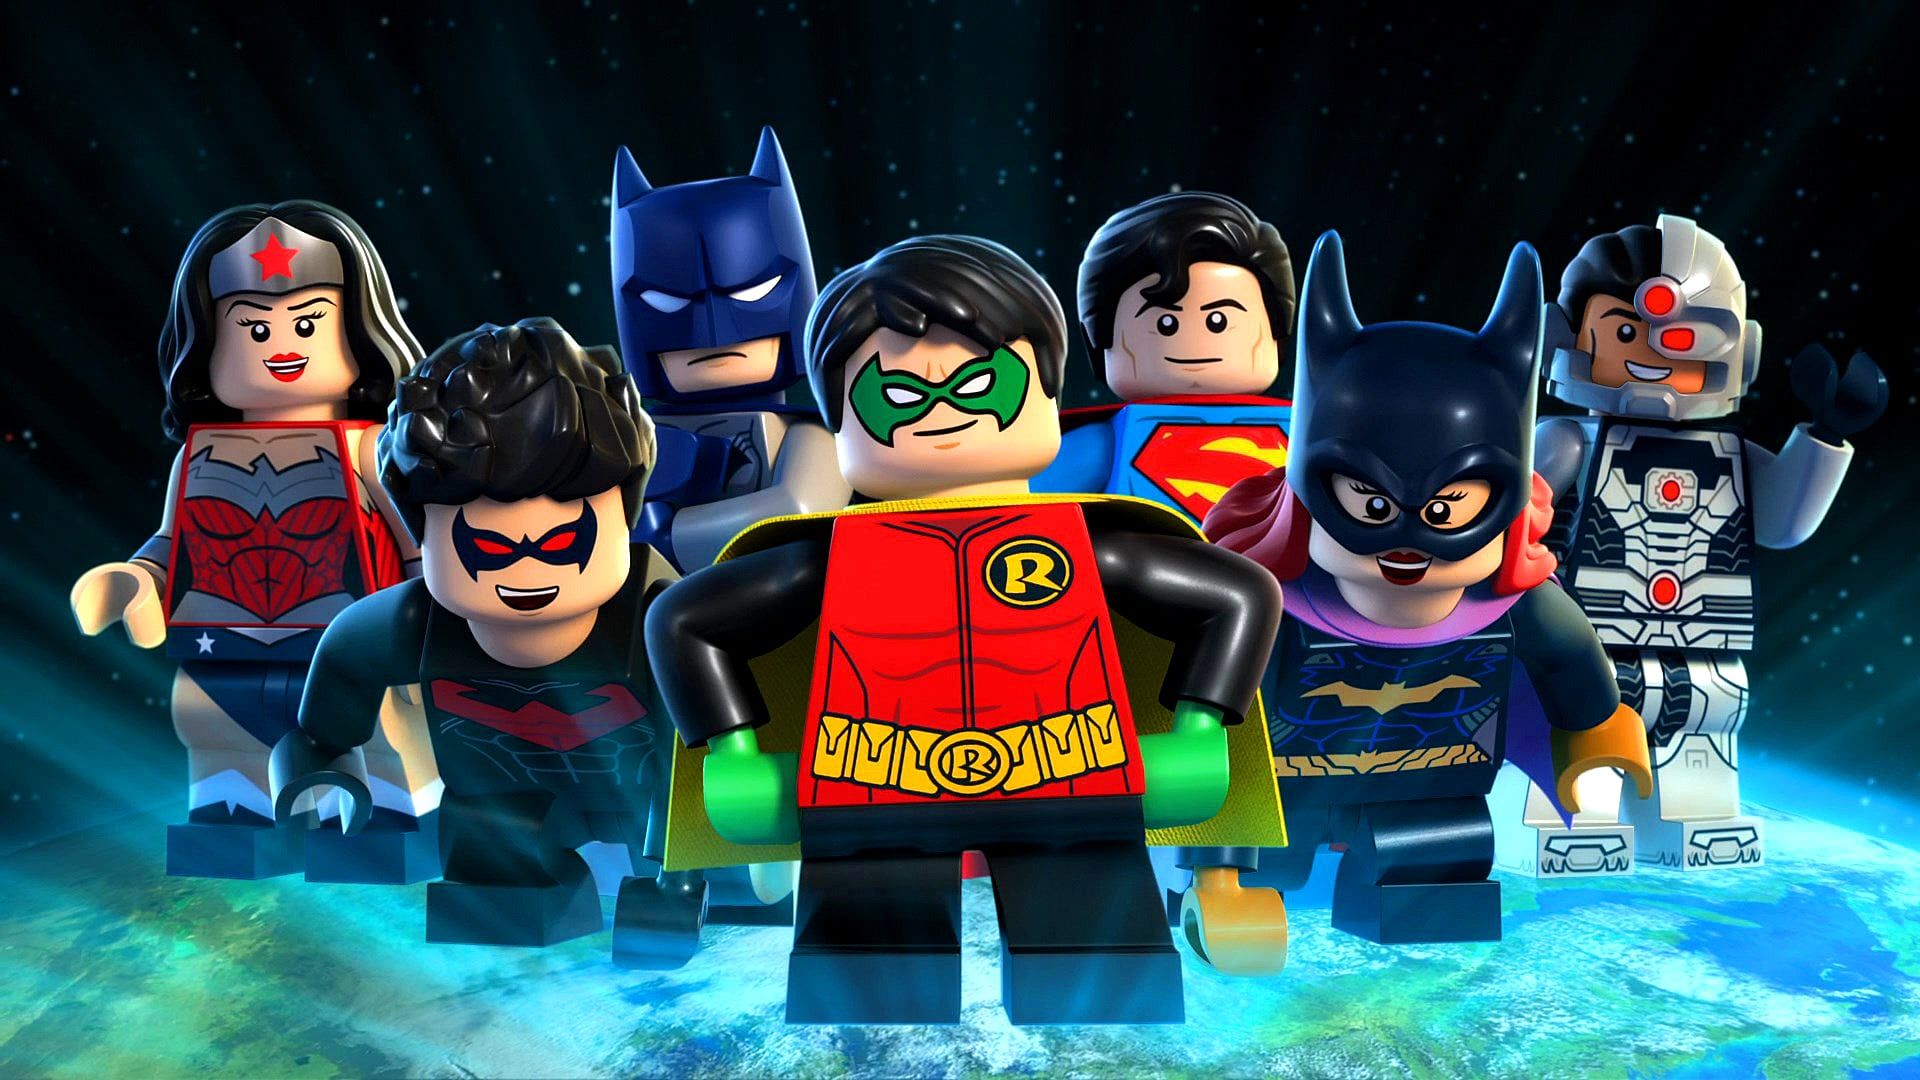 Lego DC Comics Superheroes: Justice League - Gotham City Breakout Backdrop